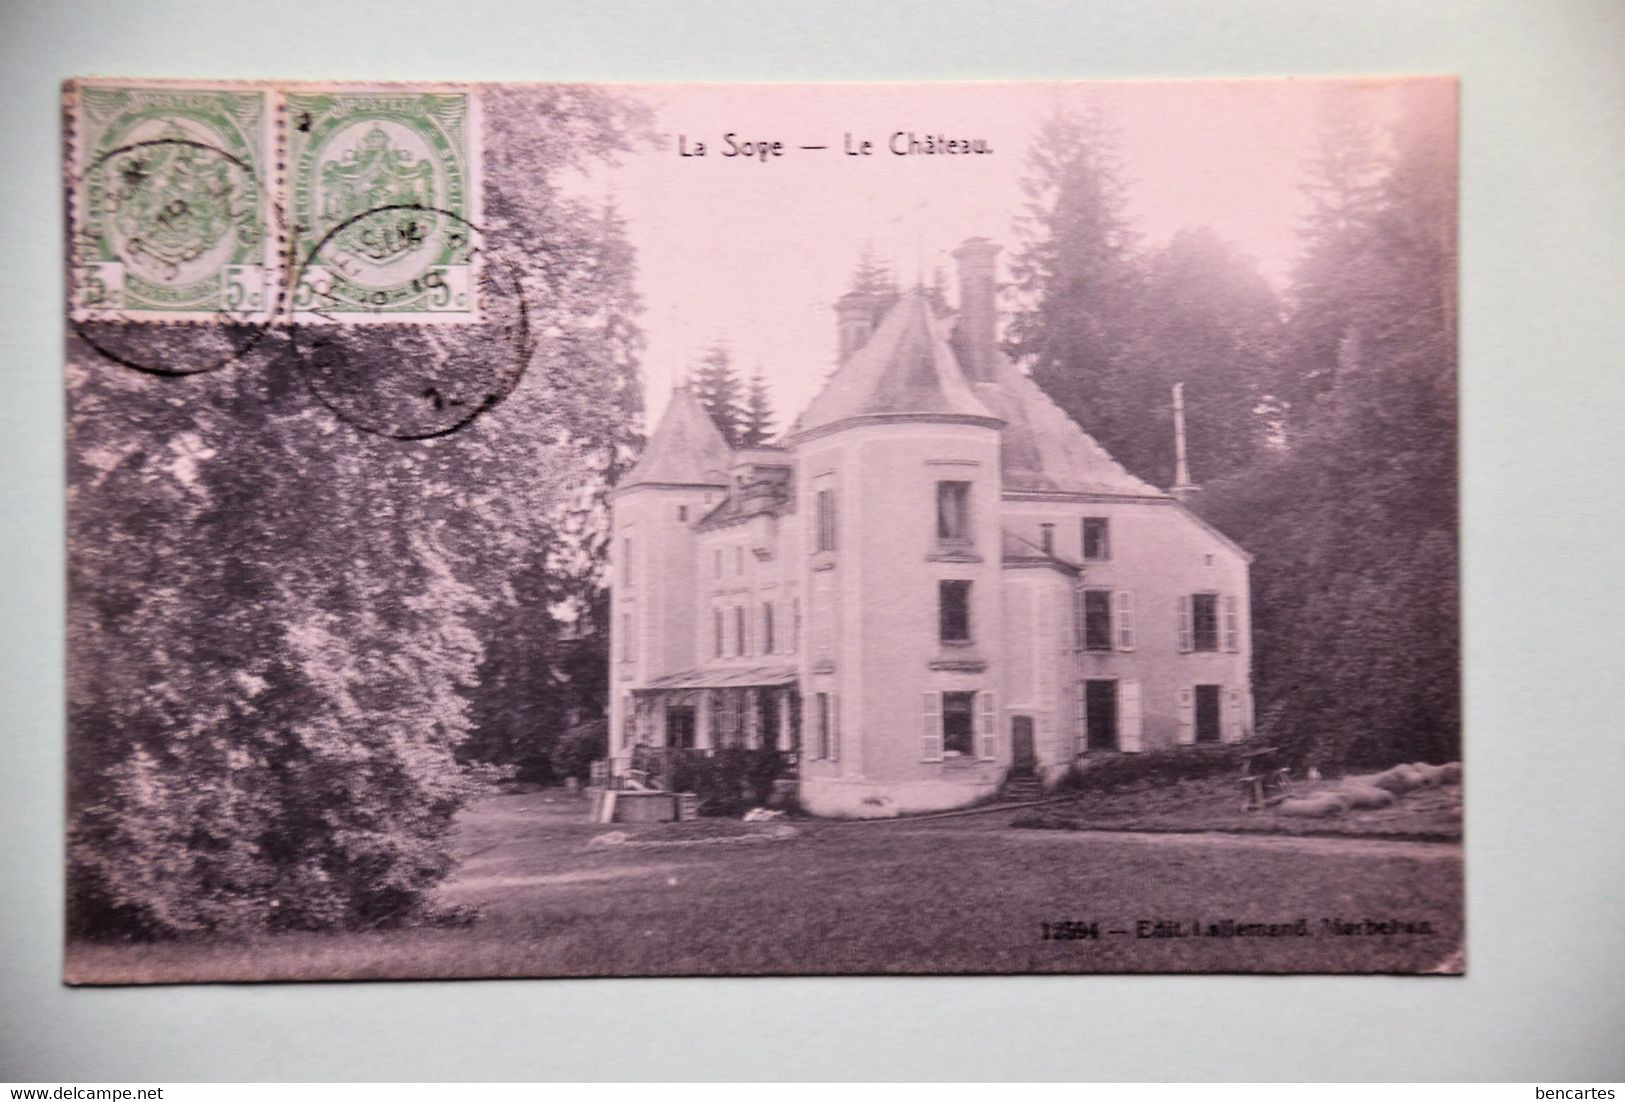 La Soye 1912: Le Château. Ed Lallemand Marbehan - Habay